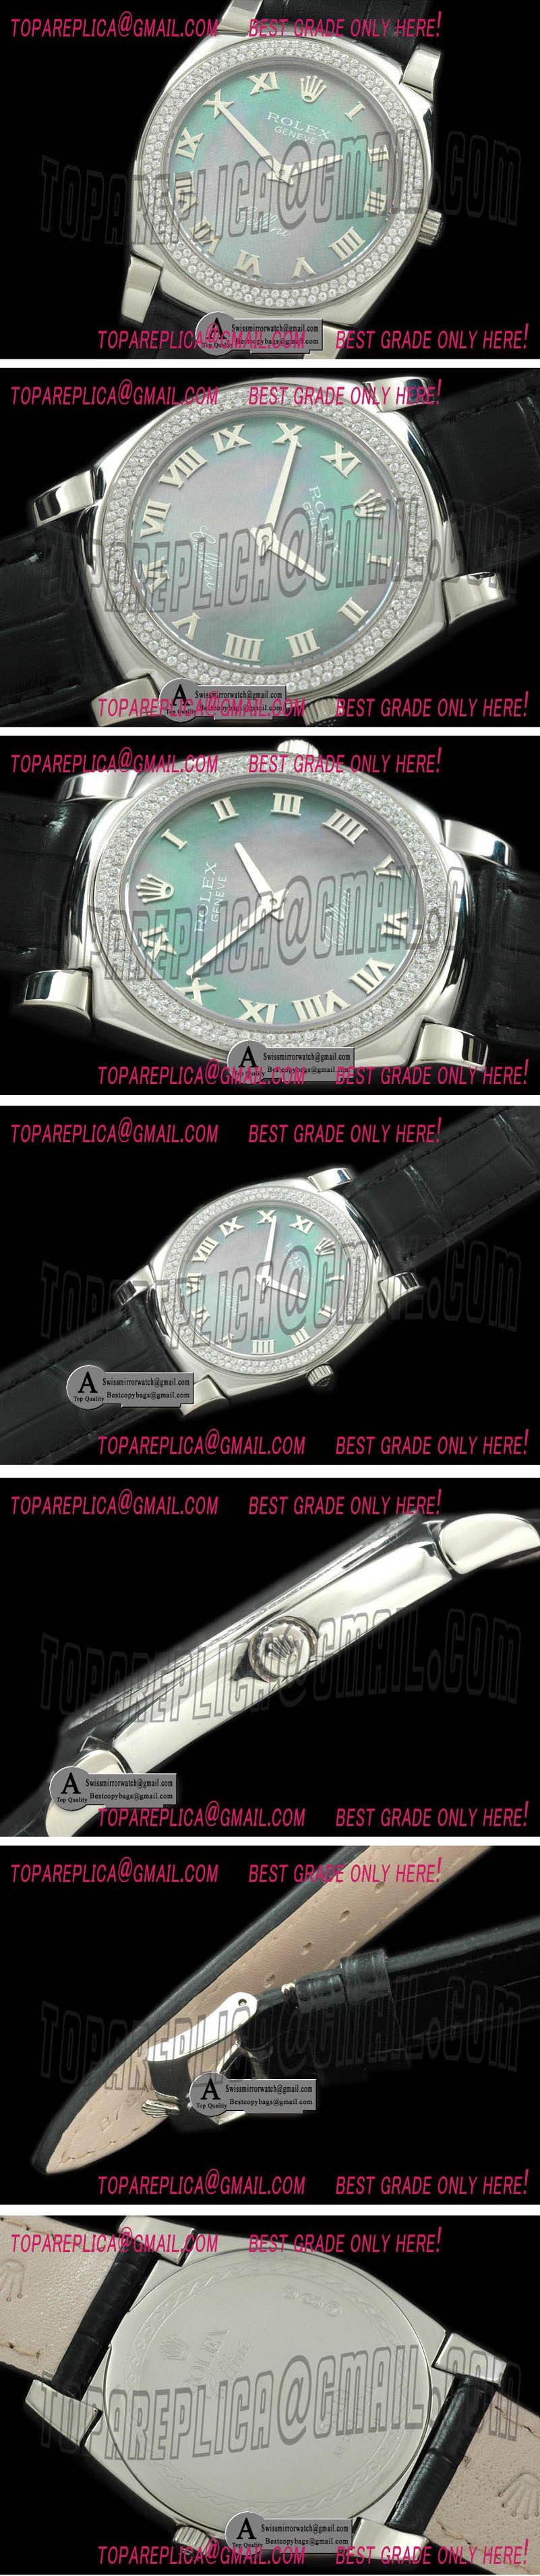 Rolex Cellini SS/Leather MOP Green Swiss Quartz Replica Watches